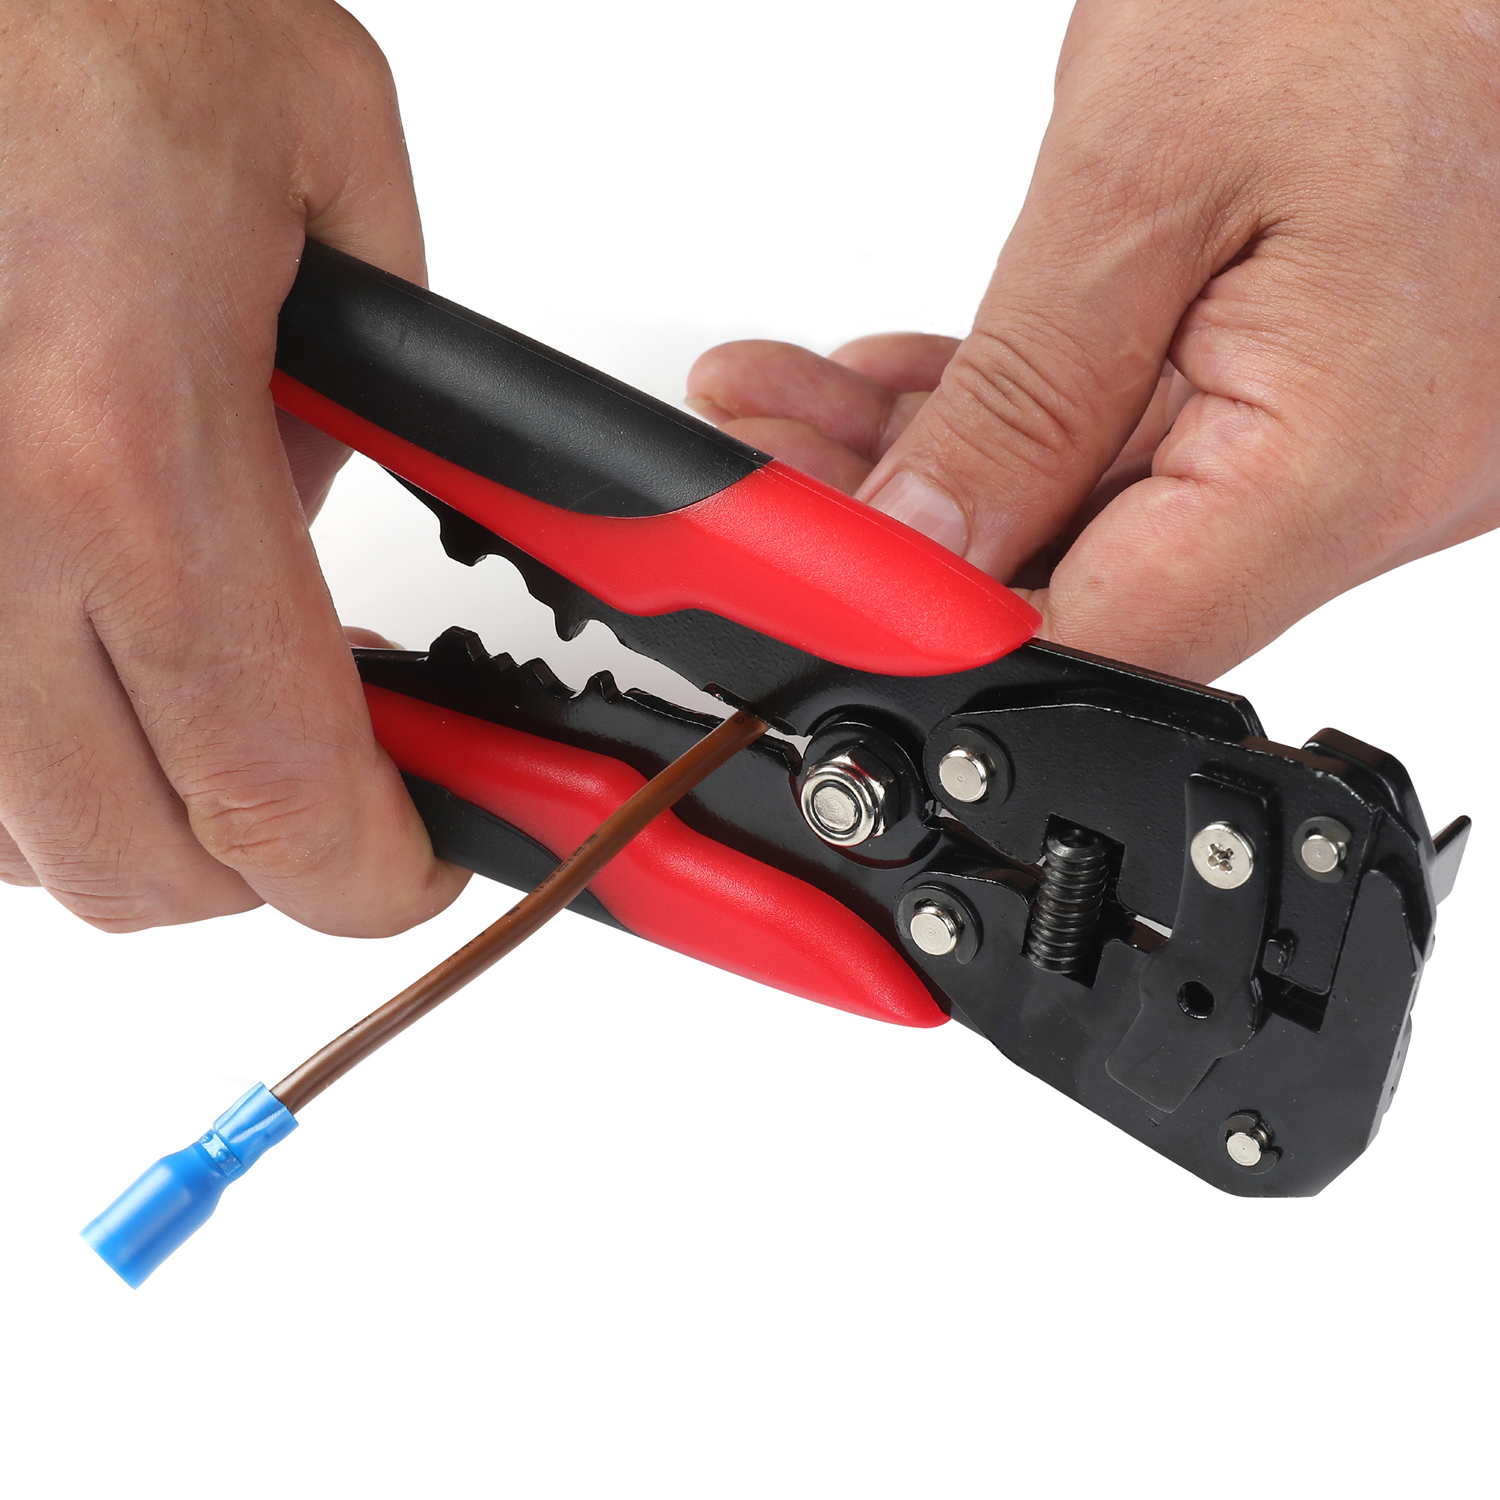 EverStart 8-inch Self Adjusting Wire Stripper, Model 5138, Black ,Red, UL Listed, New - image 3 of 10